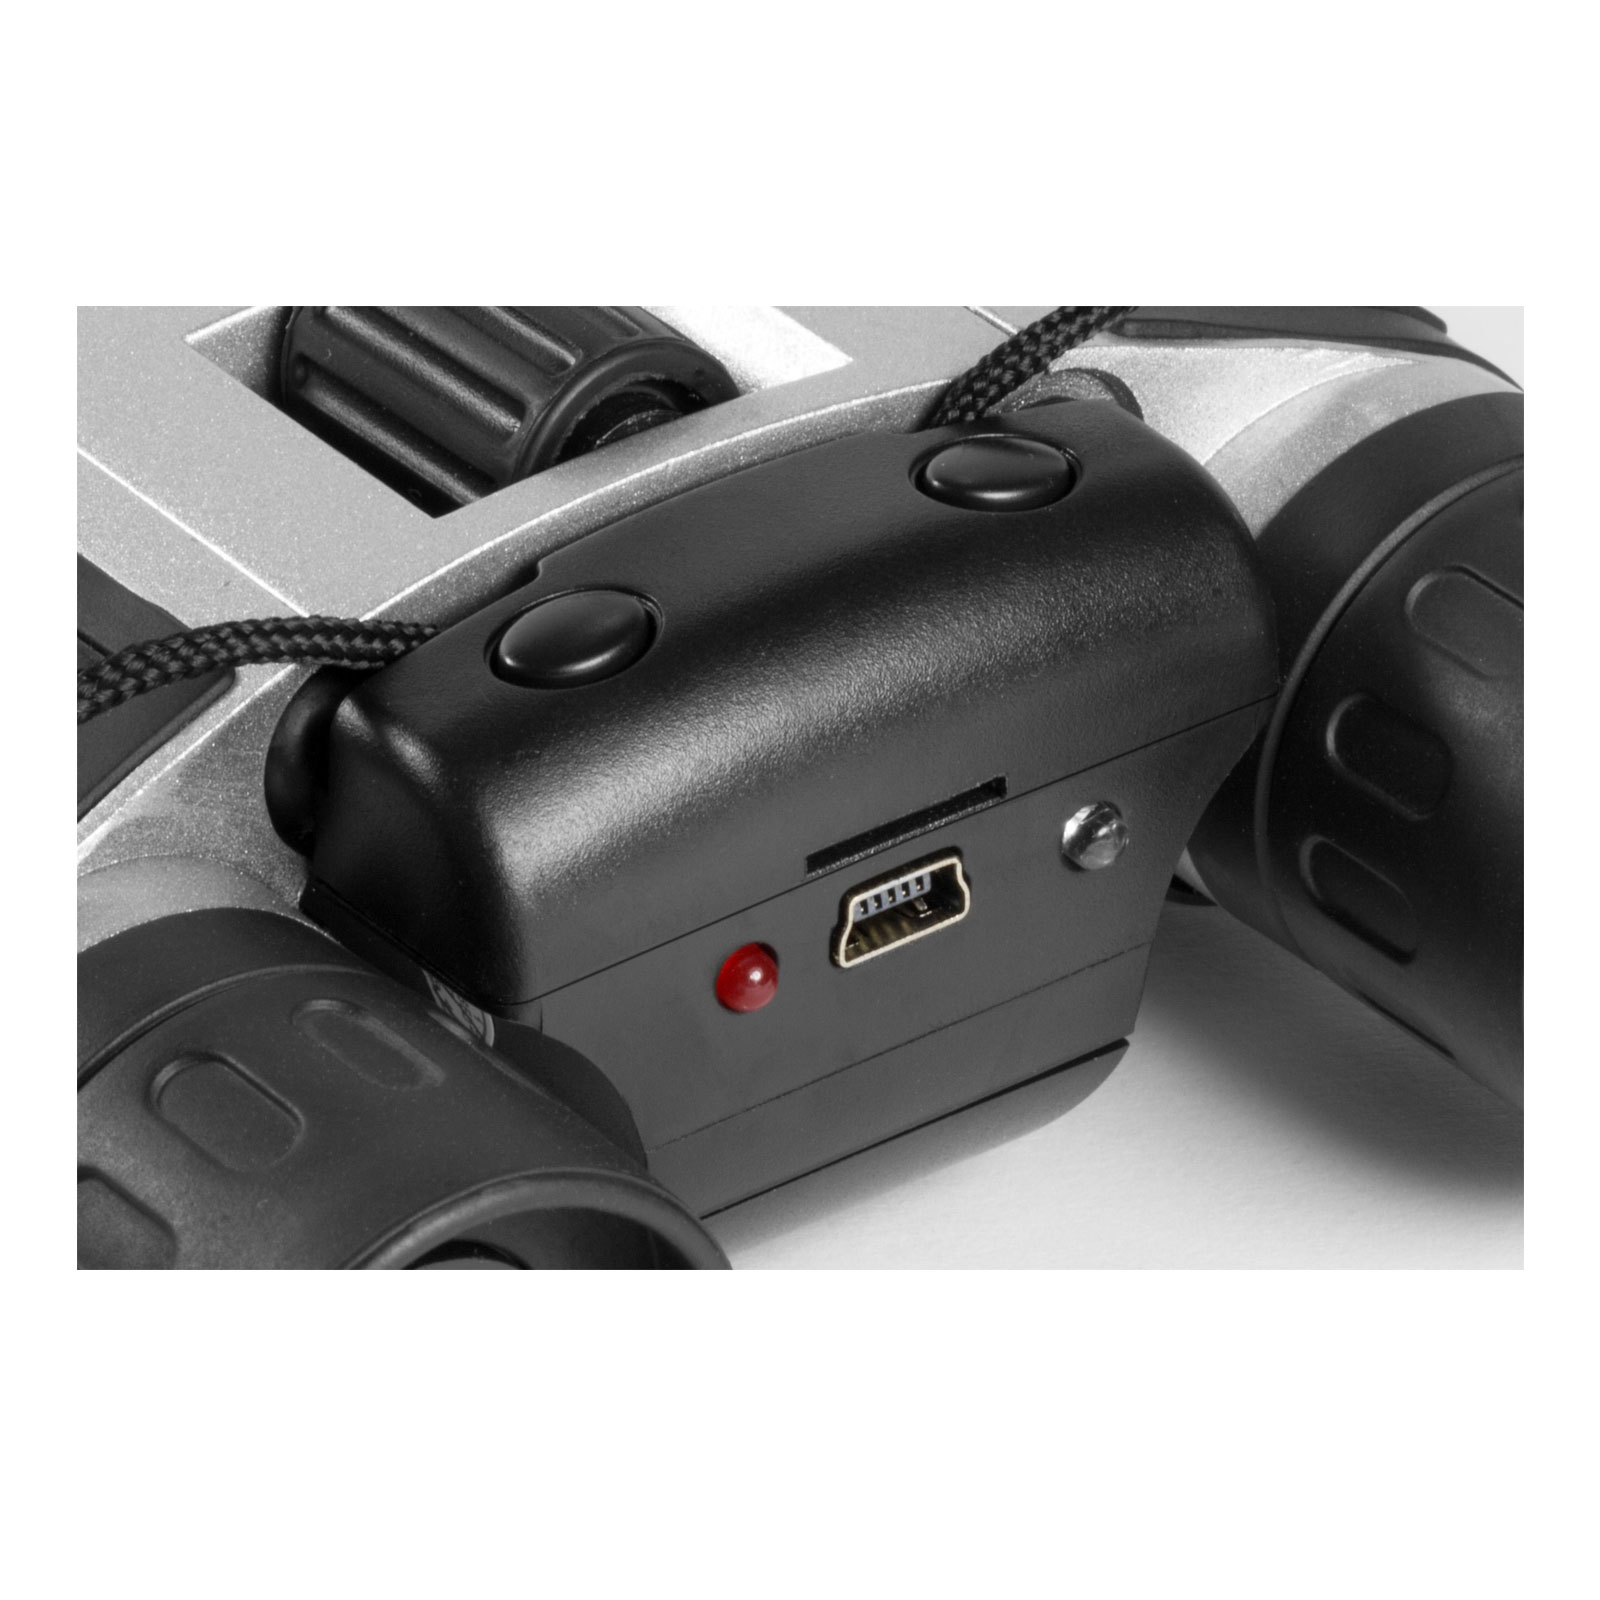 Technaxx TrendGeek TG-125 Fernglas mit integrierter Digitalkamera